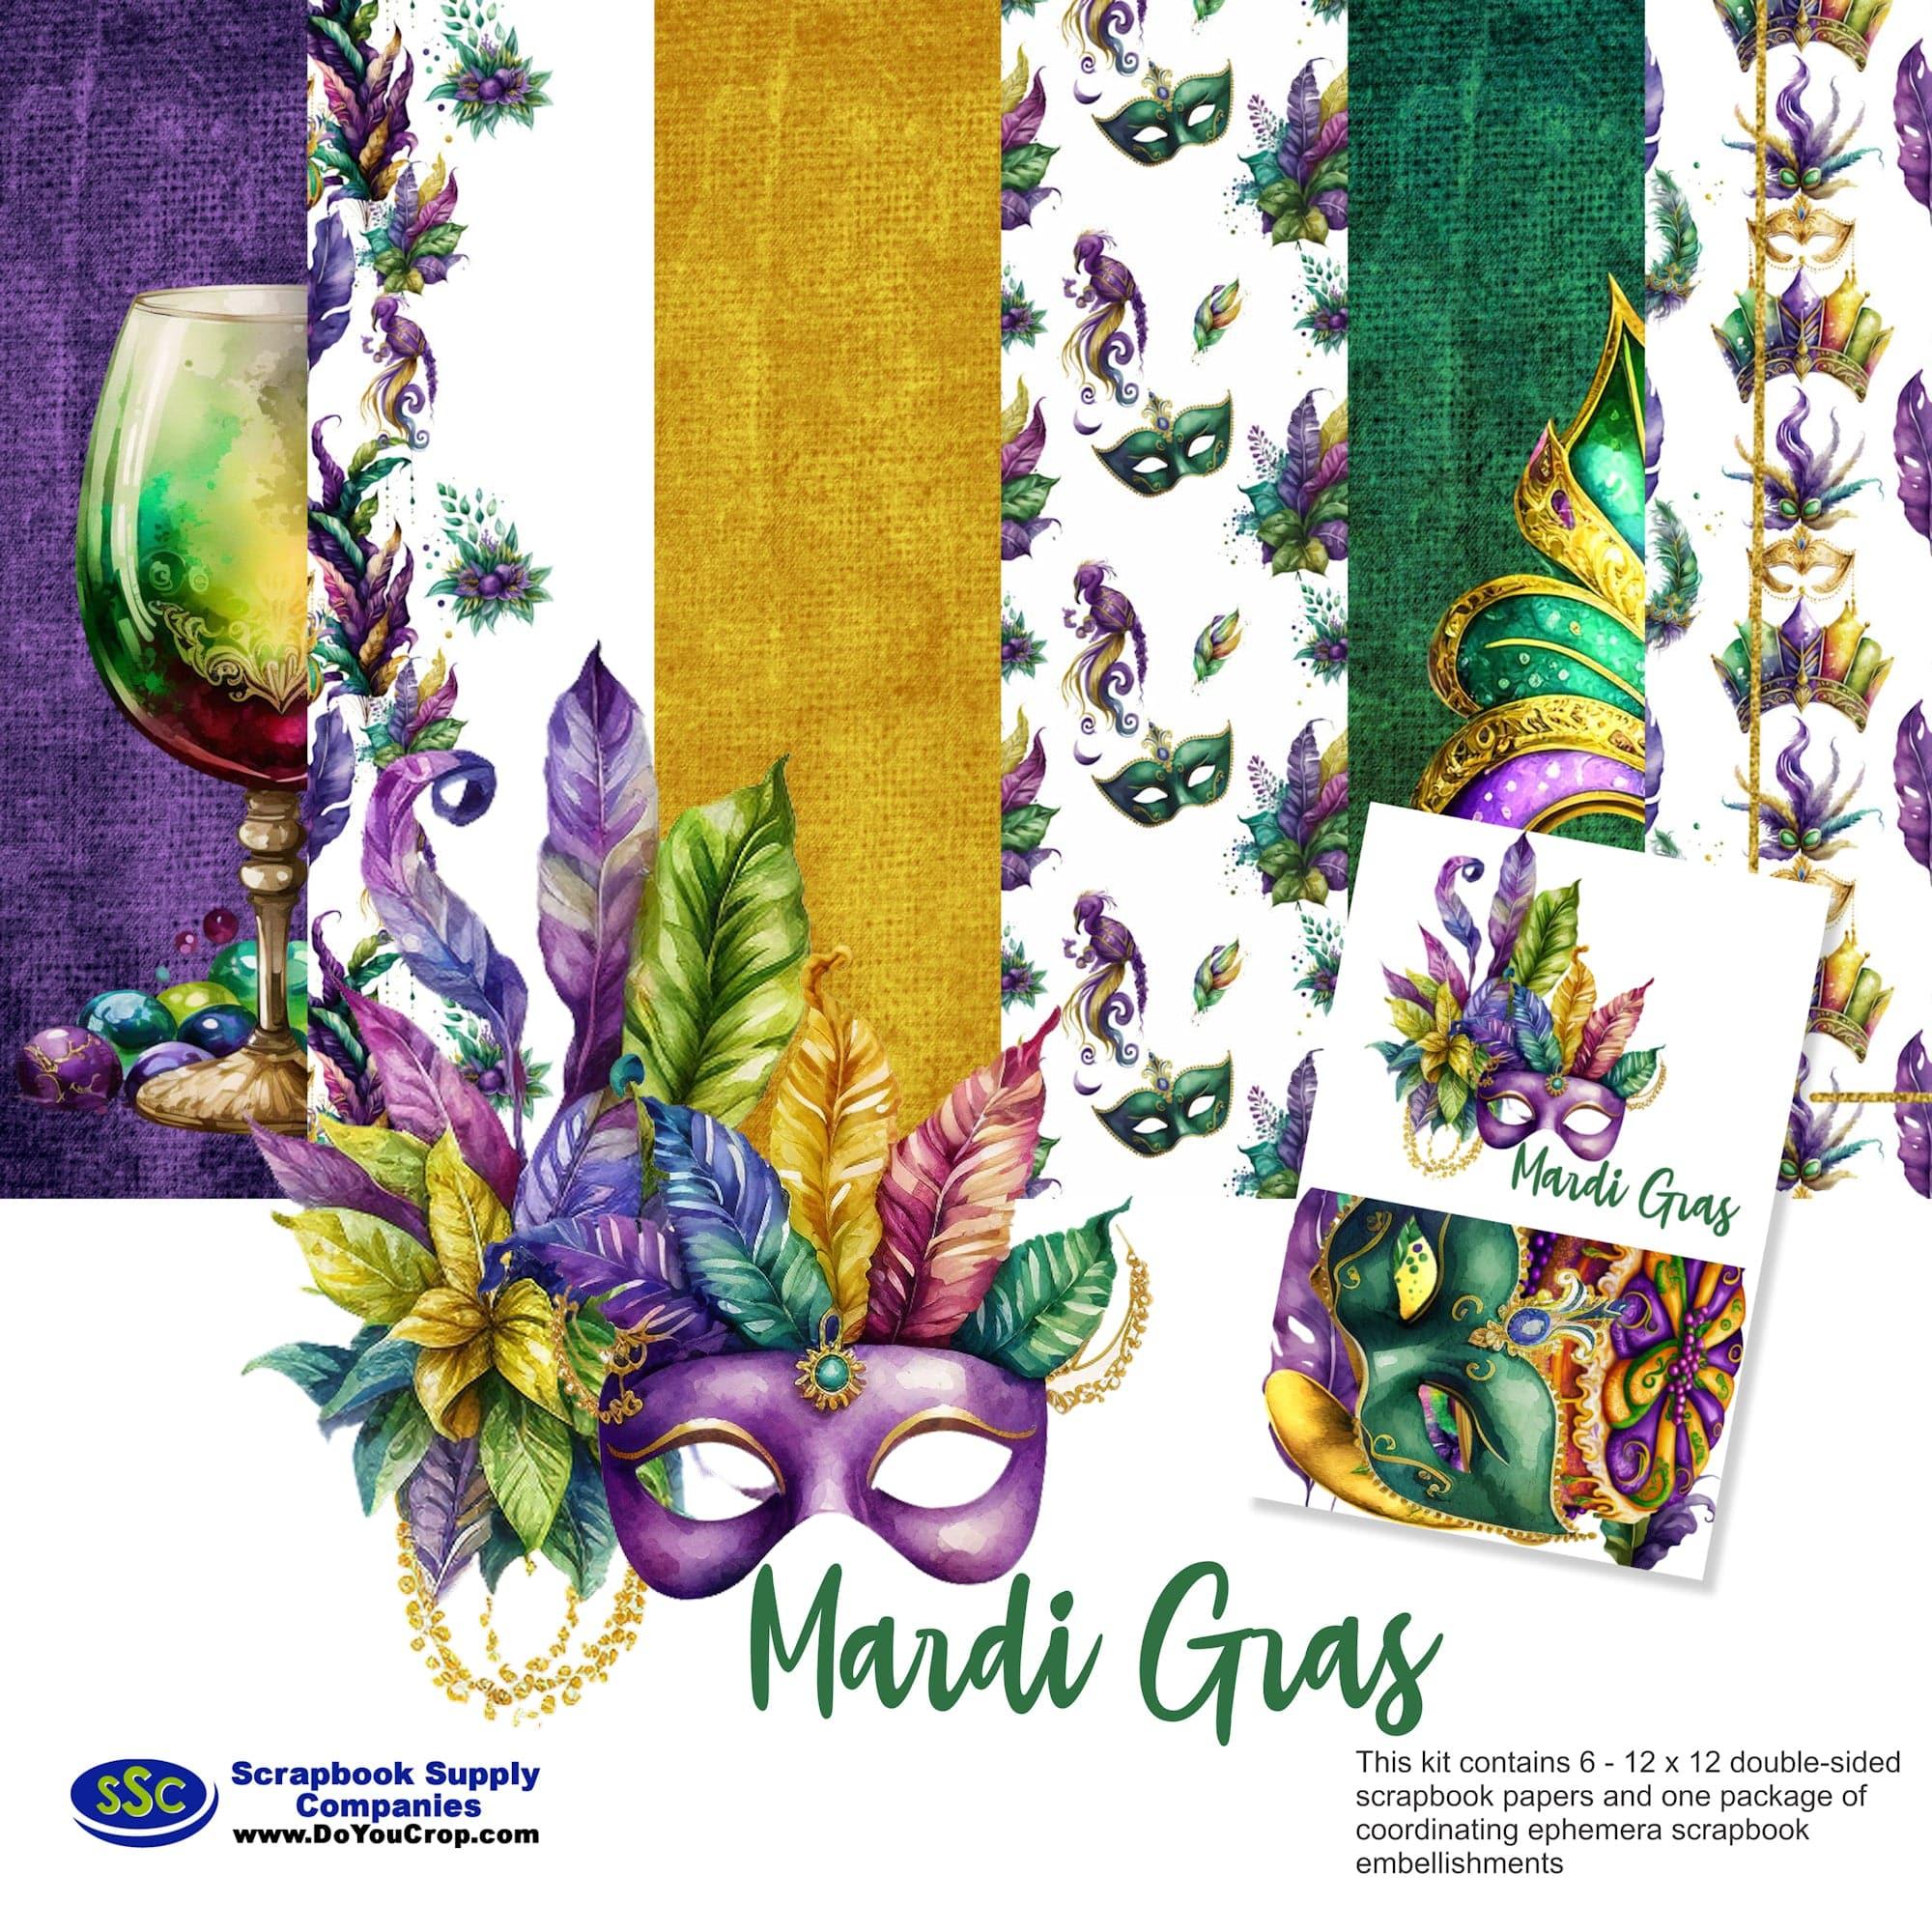 Mardi Gras 12 x 12 Scrapbook Paper & Embellishment Kit by SSC Designs